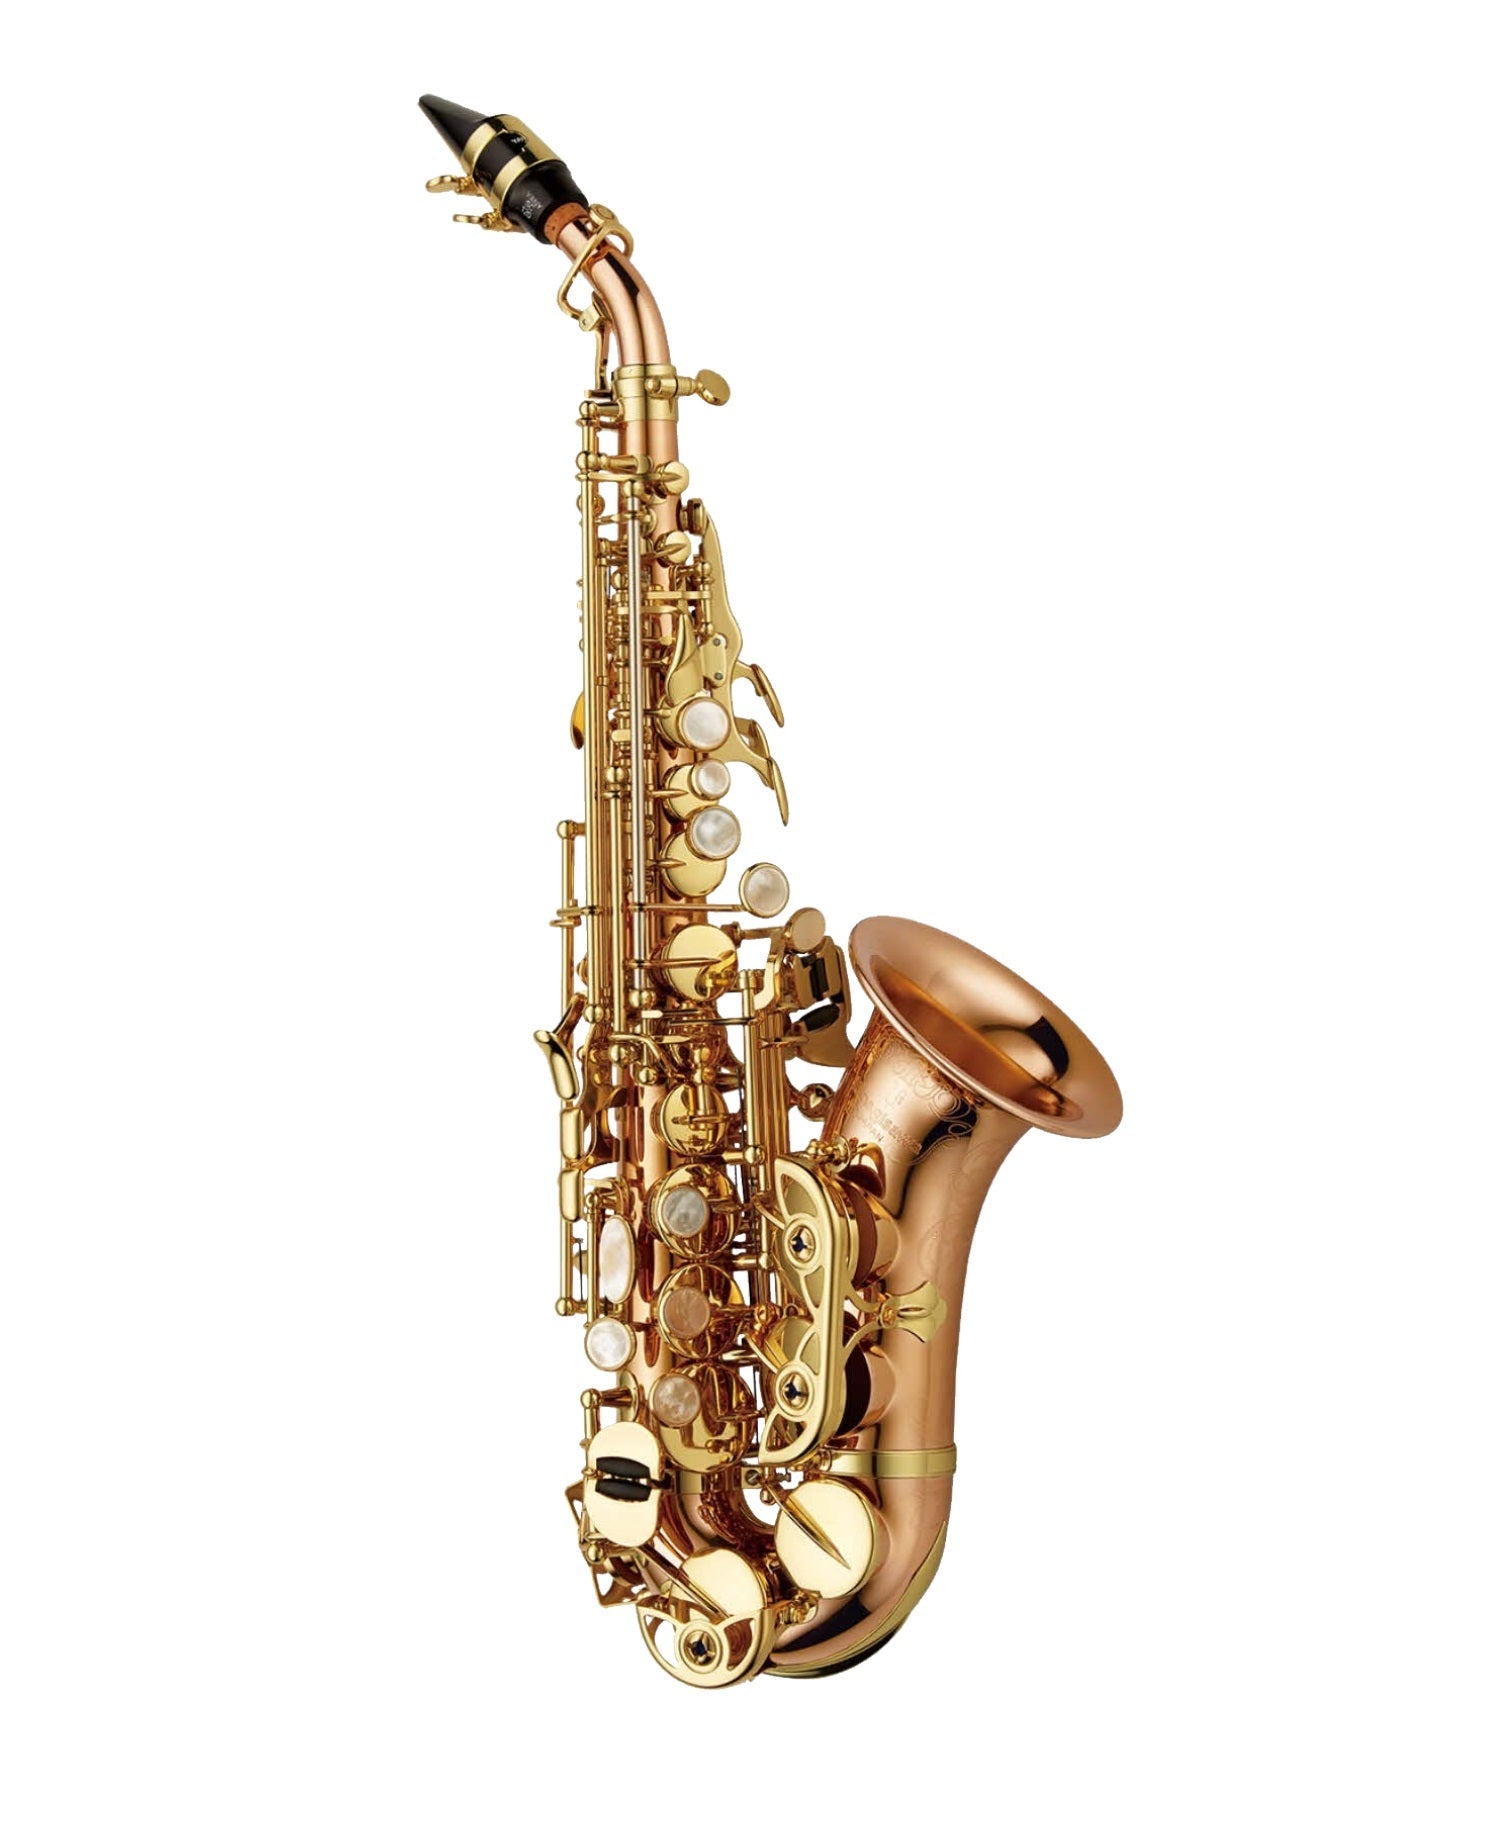 Yanagisawa WO Series Elite Curved Soprano Saxophones - Premium Soprano Saxophone from Yanagisawa - Just $5857! Shop now at Poppa's Music